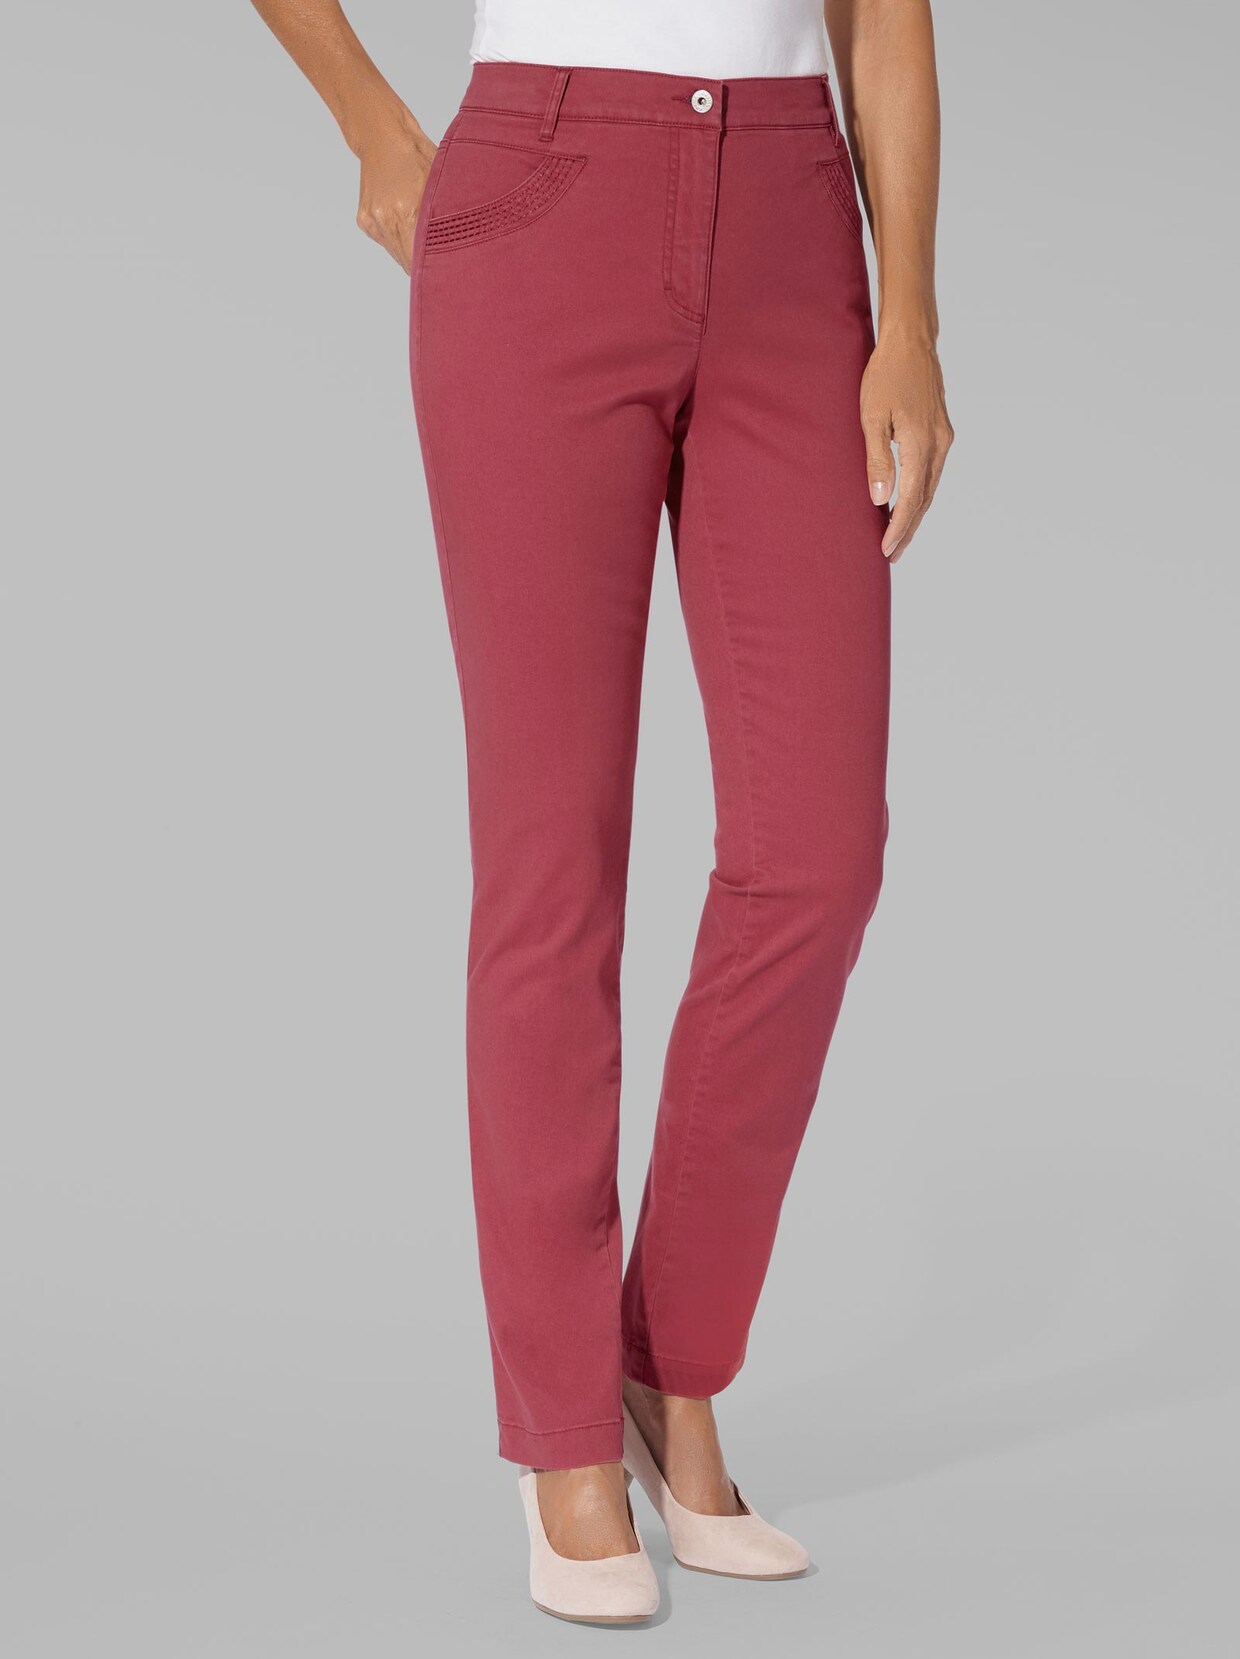 Cosma pantalon extensible - rouge